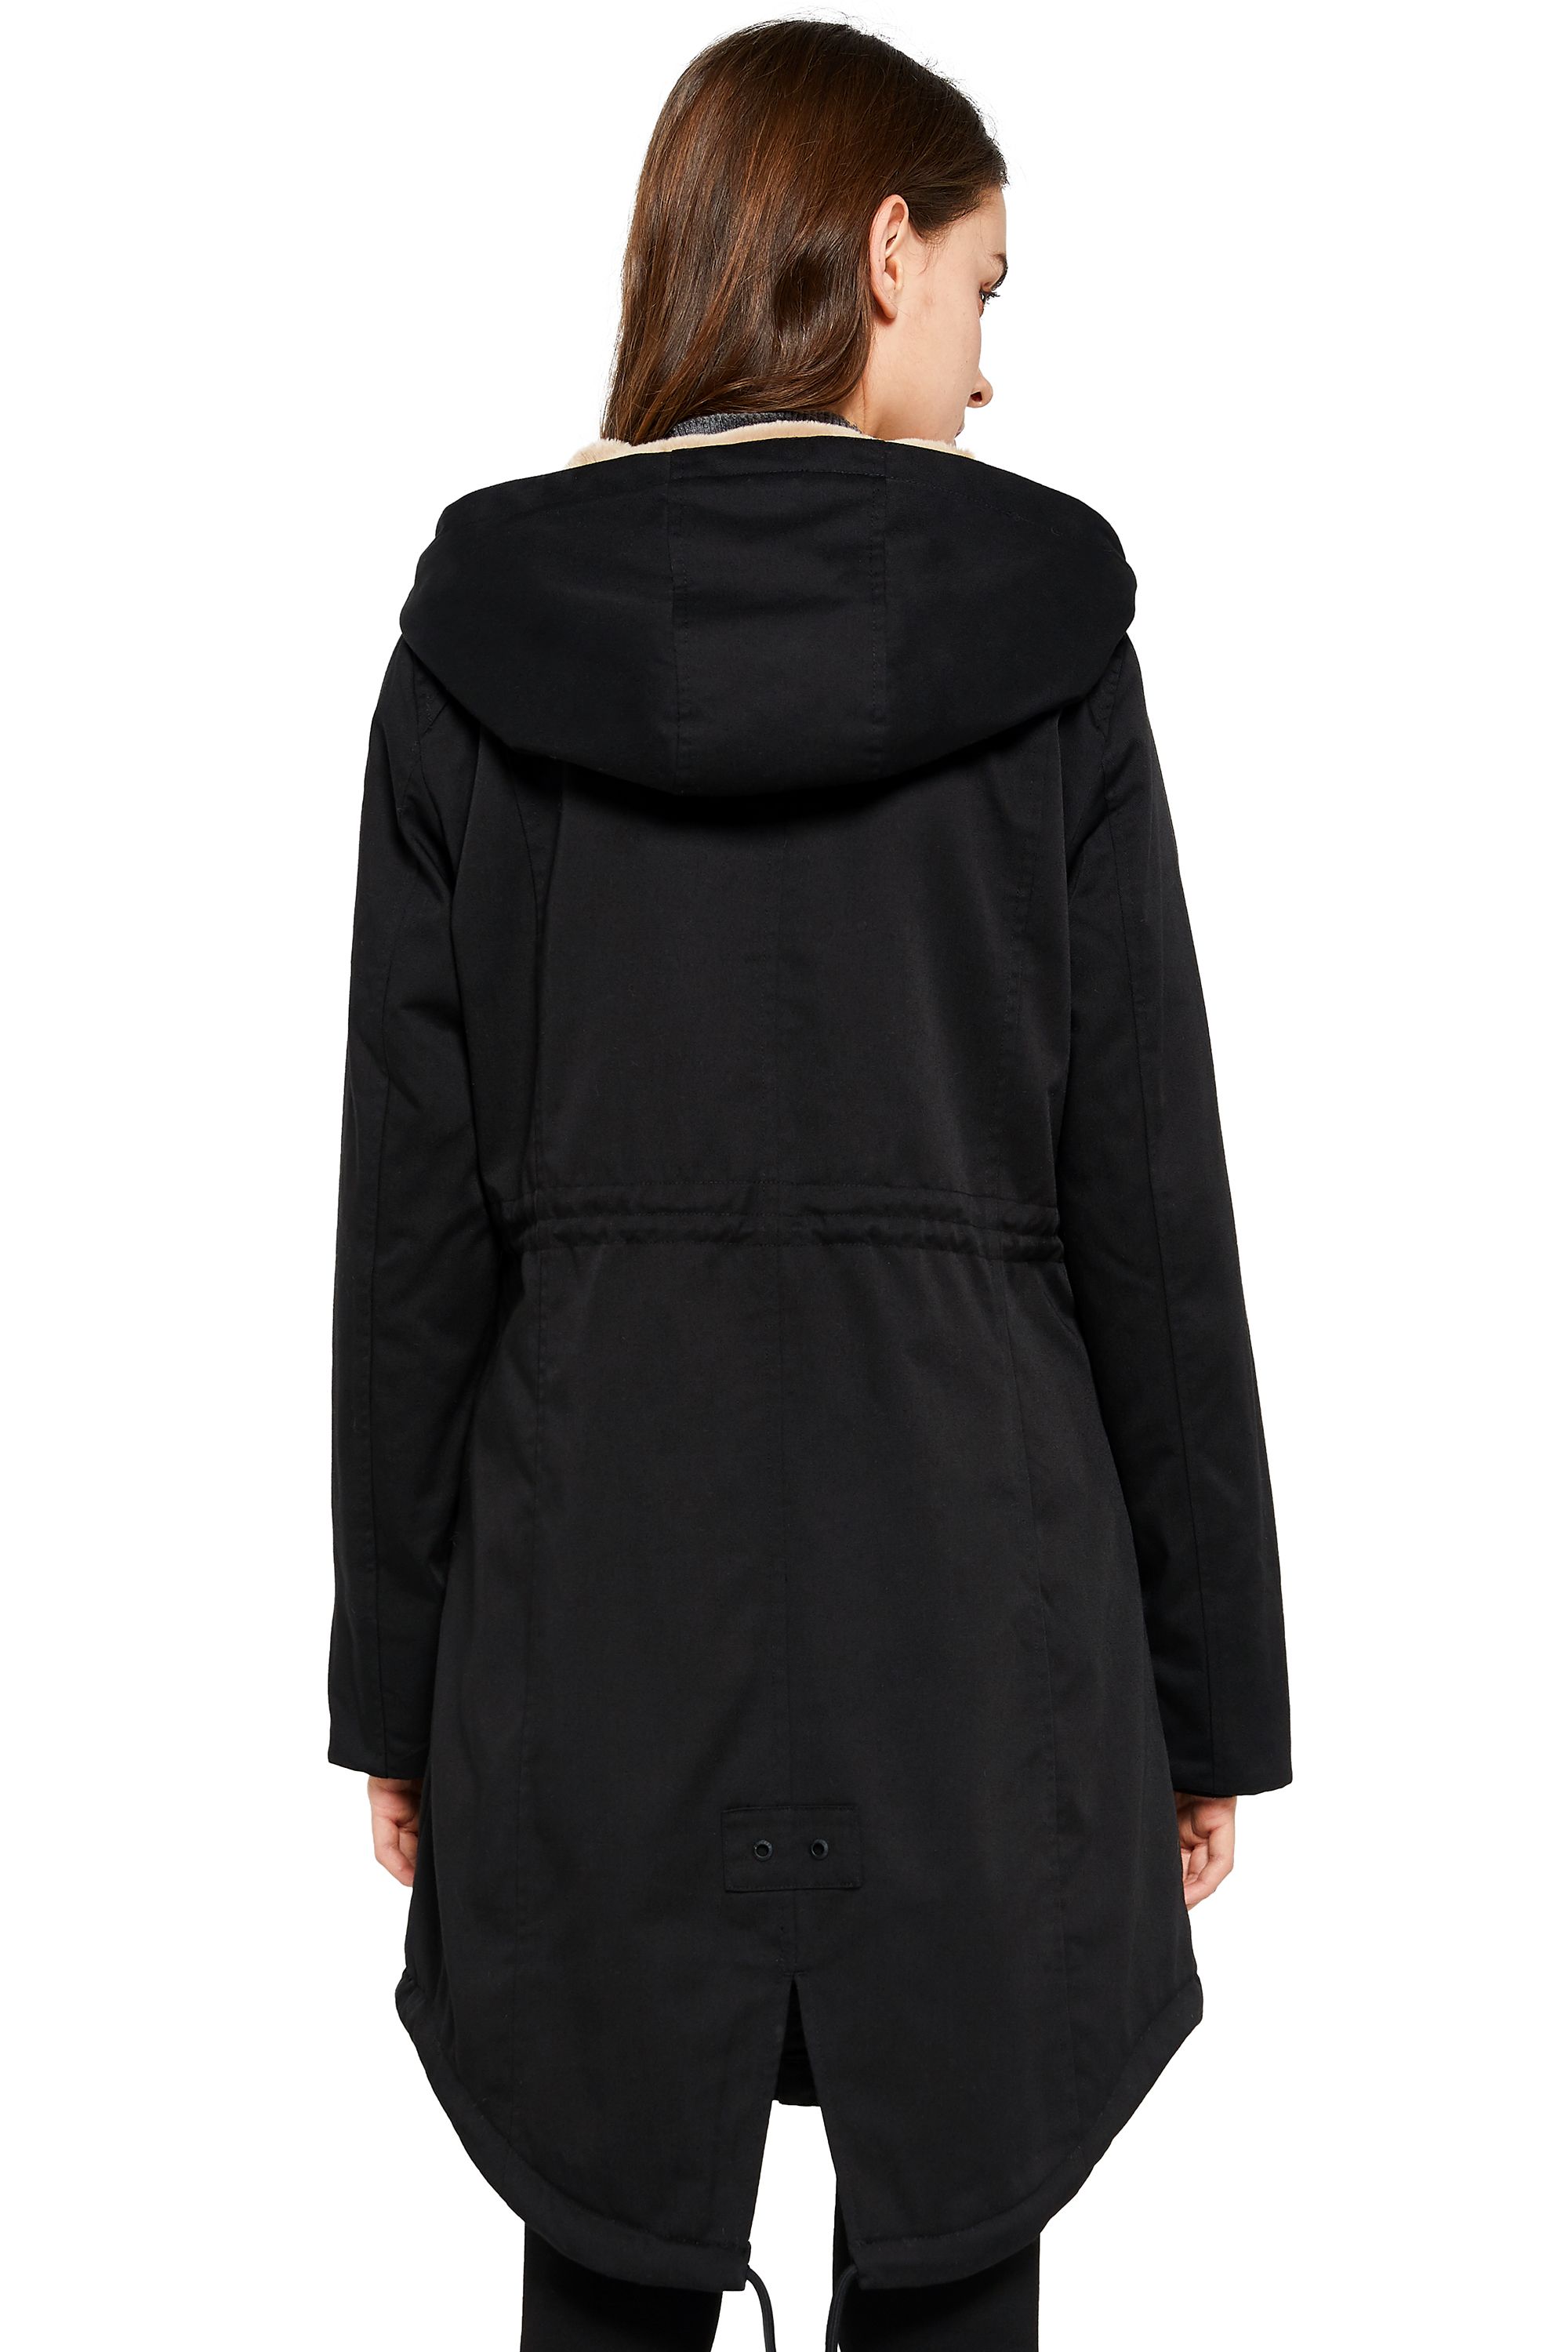 Orolay Women's Winter Parka Fleece Parka Warm Winter Coat Hoodie Jacket Mid length Winter Jacket Black XS - image 2 of 5